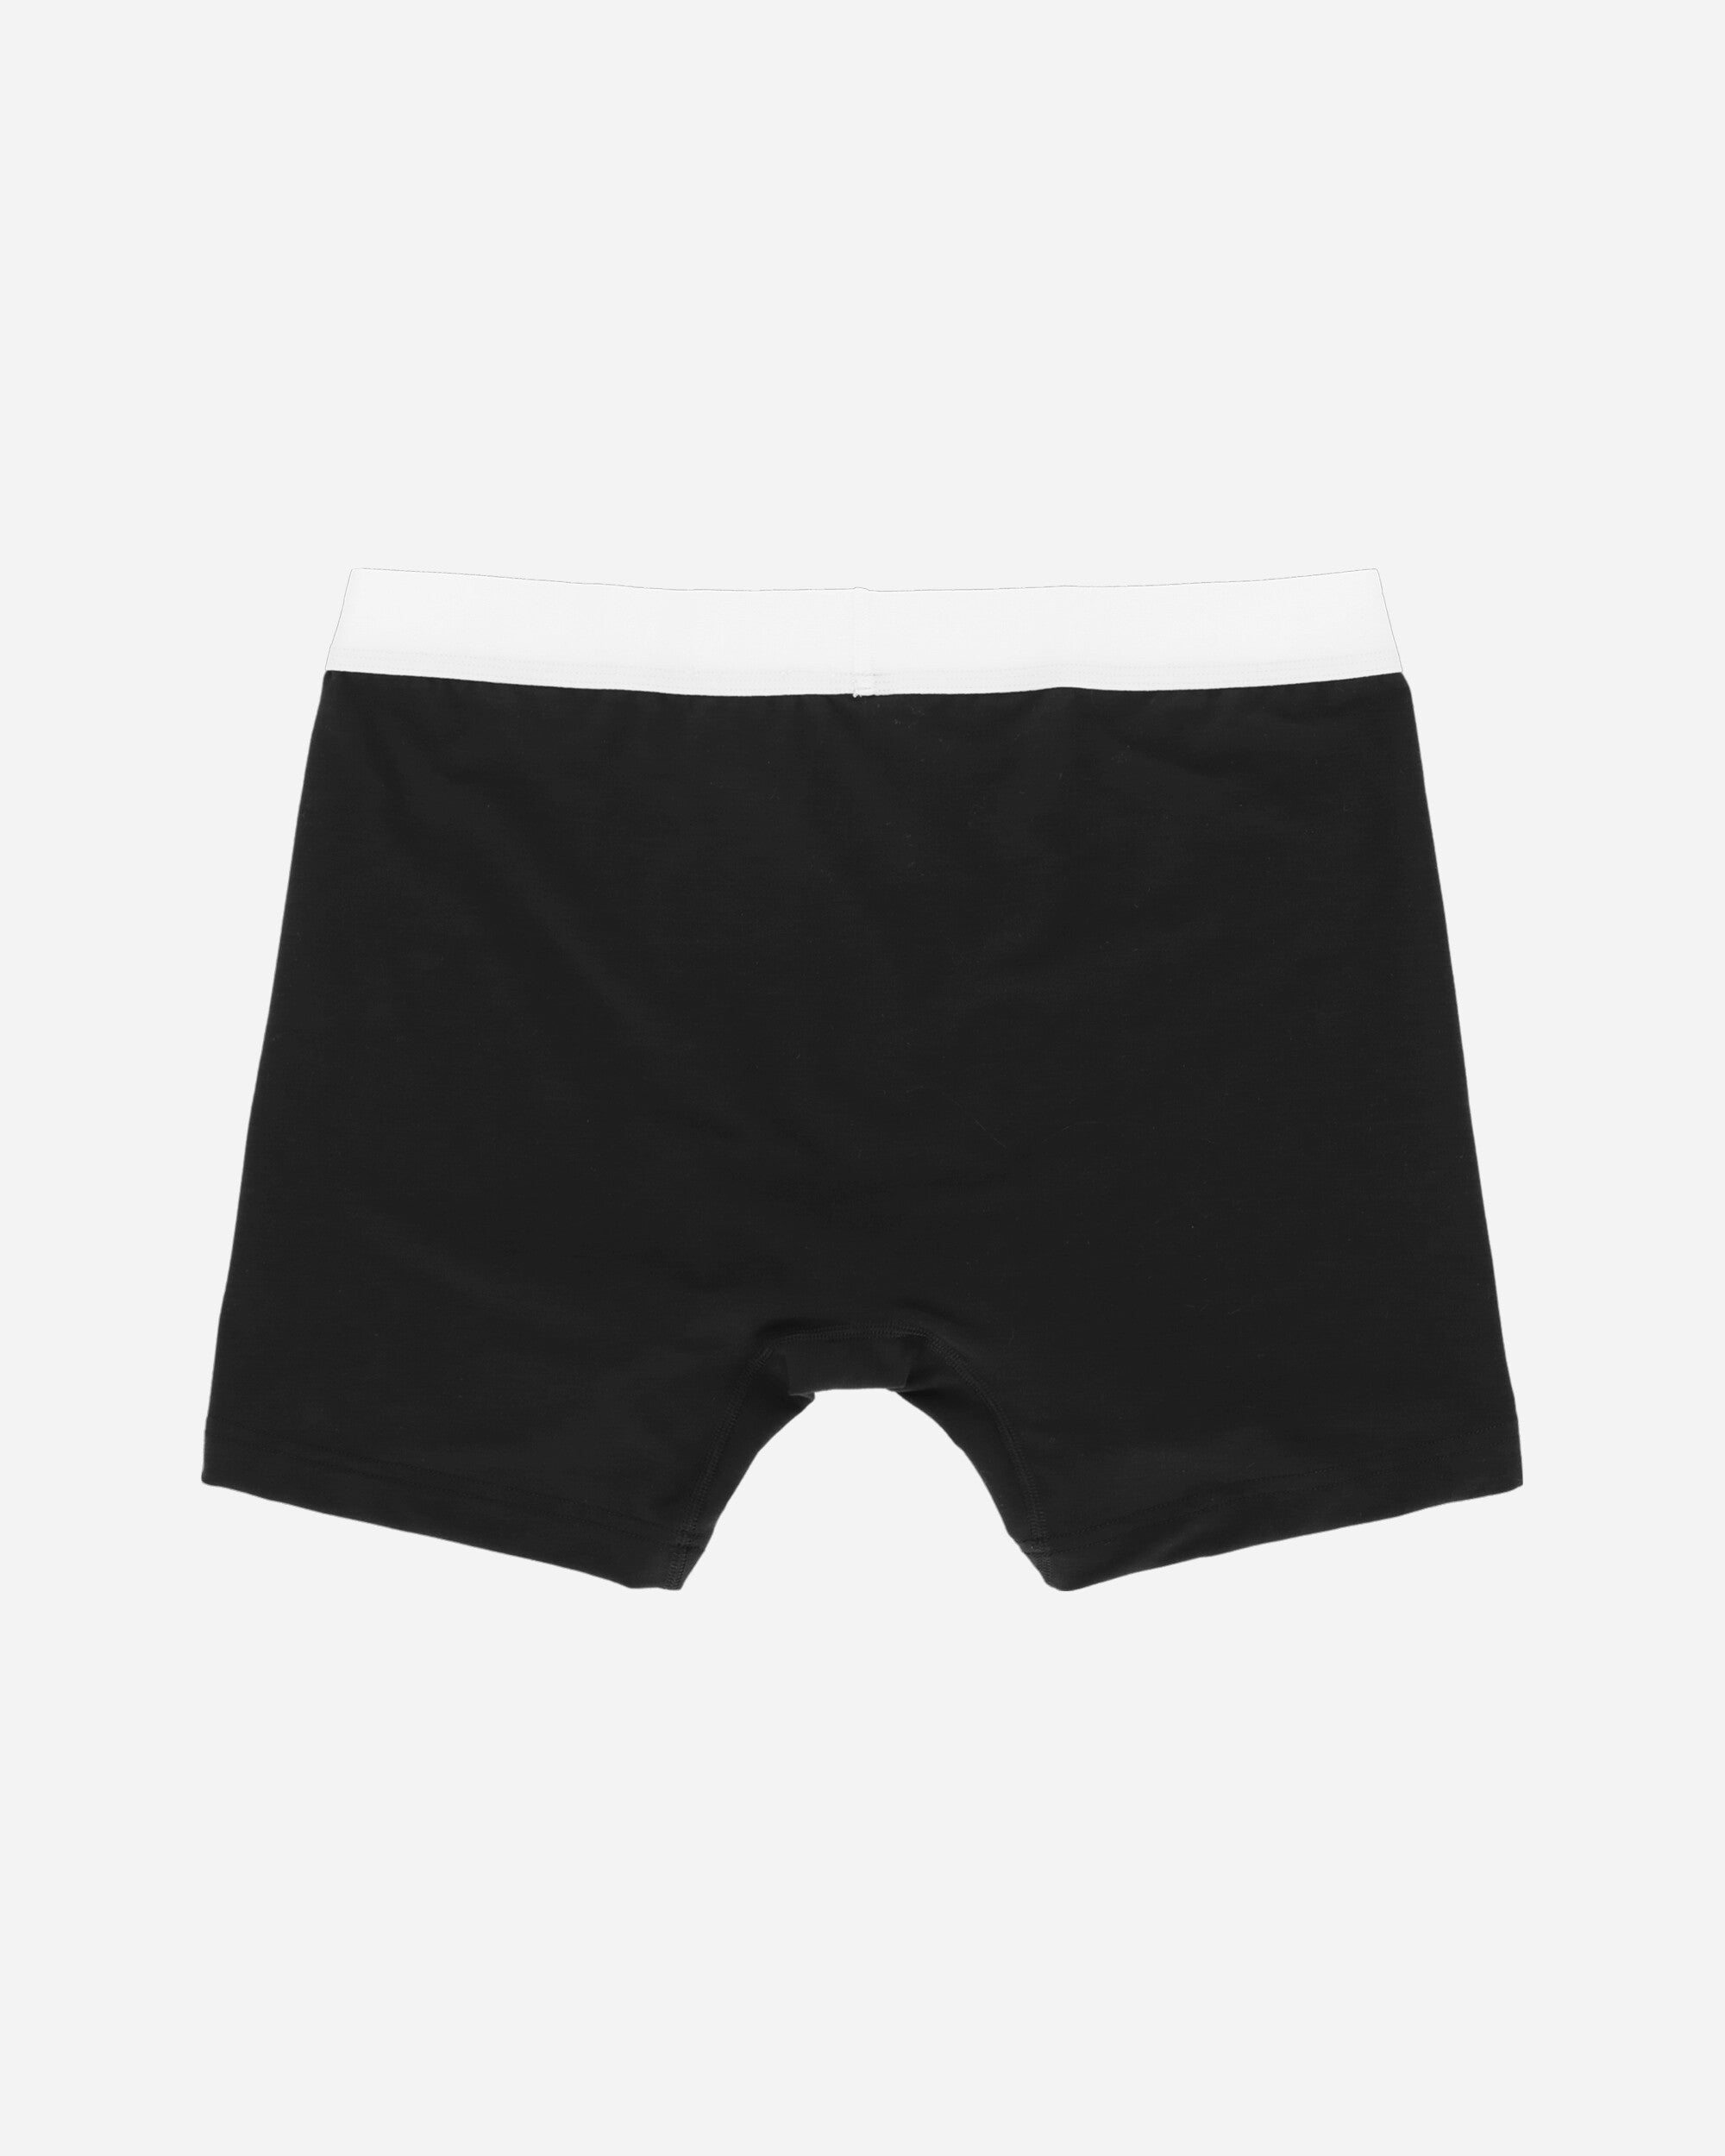 Nike Nrg X Se Black Underwear Boxers CK1542-010